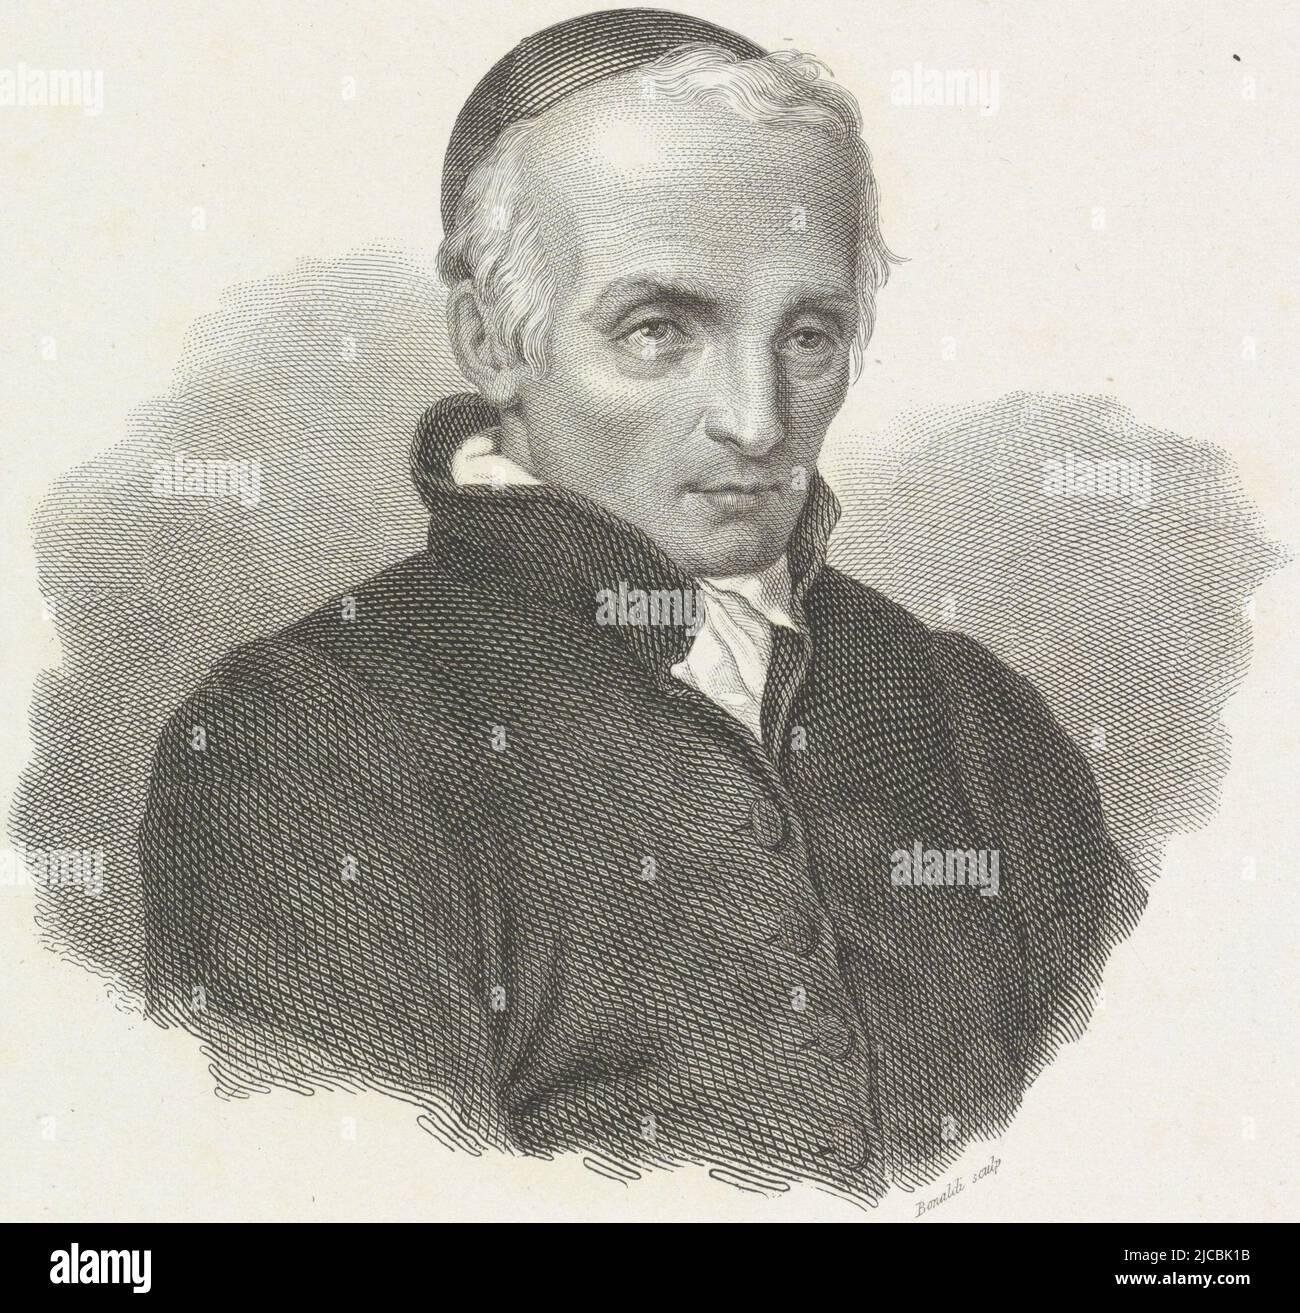 Portrait of Ottavio Giovanni Battista Assarotti, print maker: Giovanni A. Bonaldi, (mentioned on object), Italy, 1814 - 1829, paper, engraving, h 268 mm × w 180 mm Stock Photo